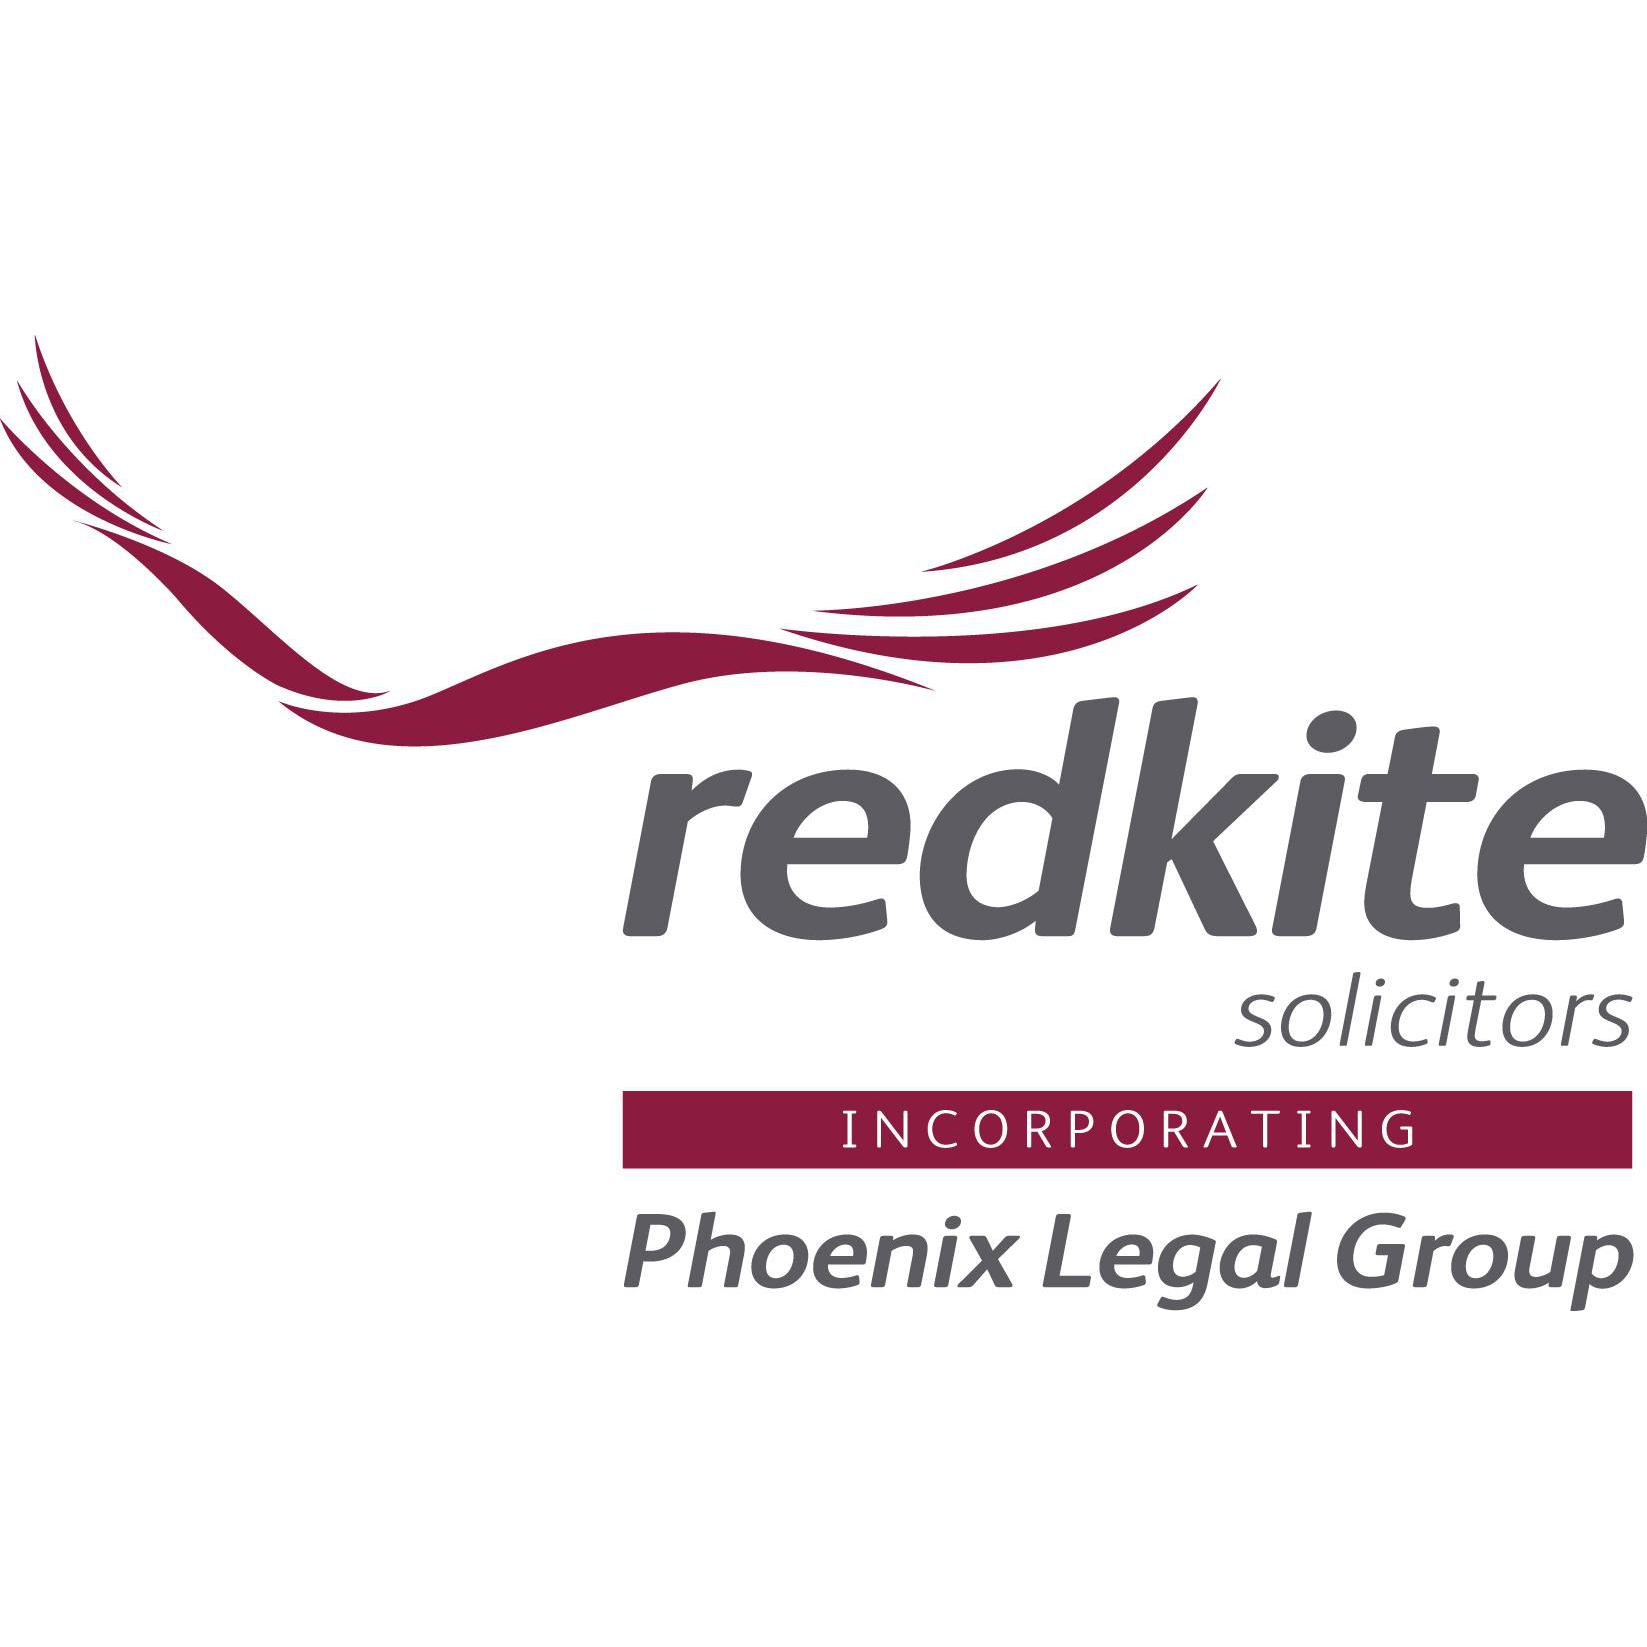 LOGO Redkite Solicitors Incorporating Phoenix Legal Group Dursley 01453 547221